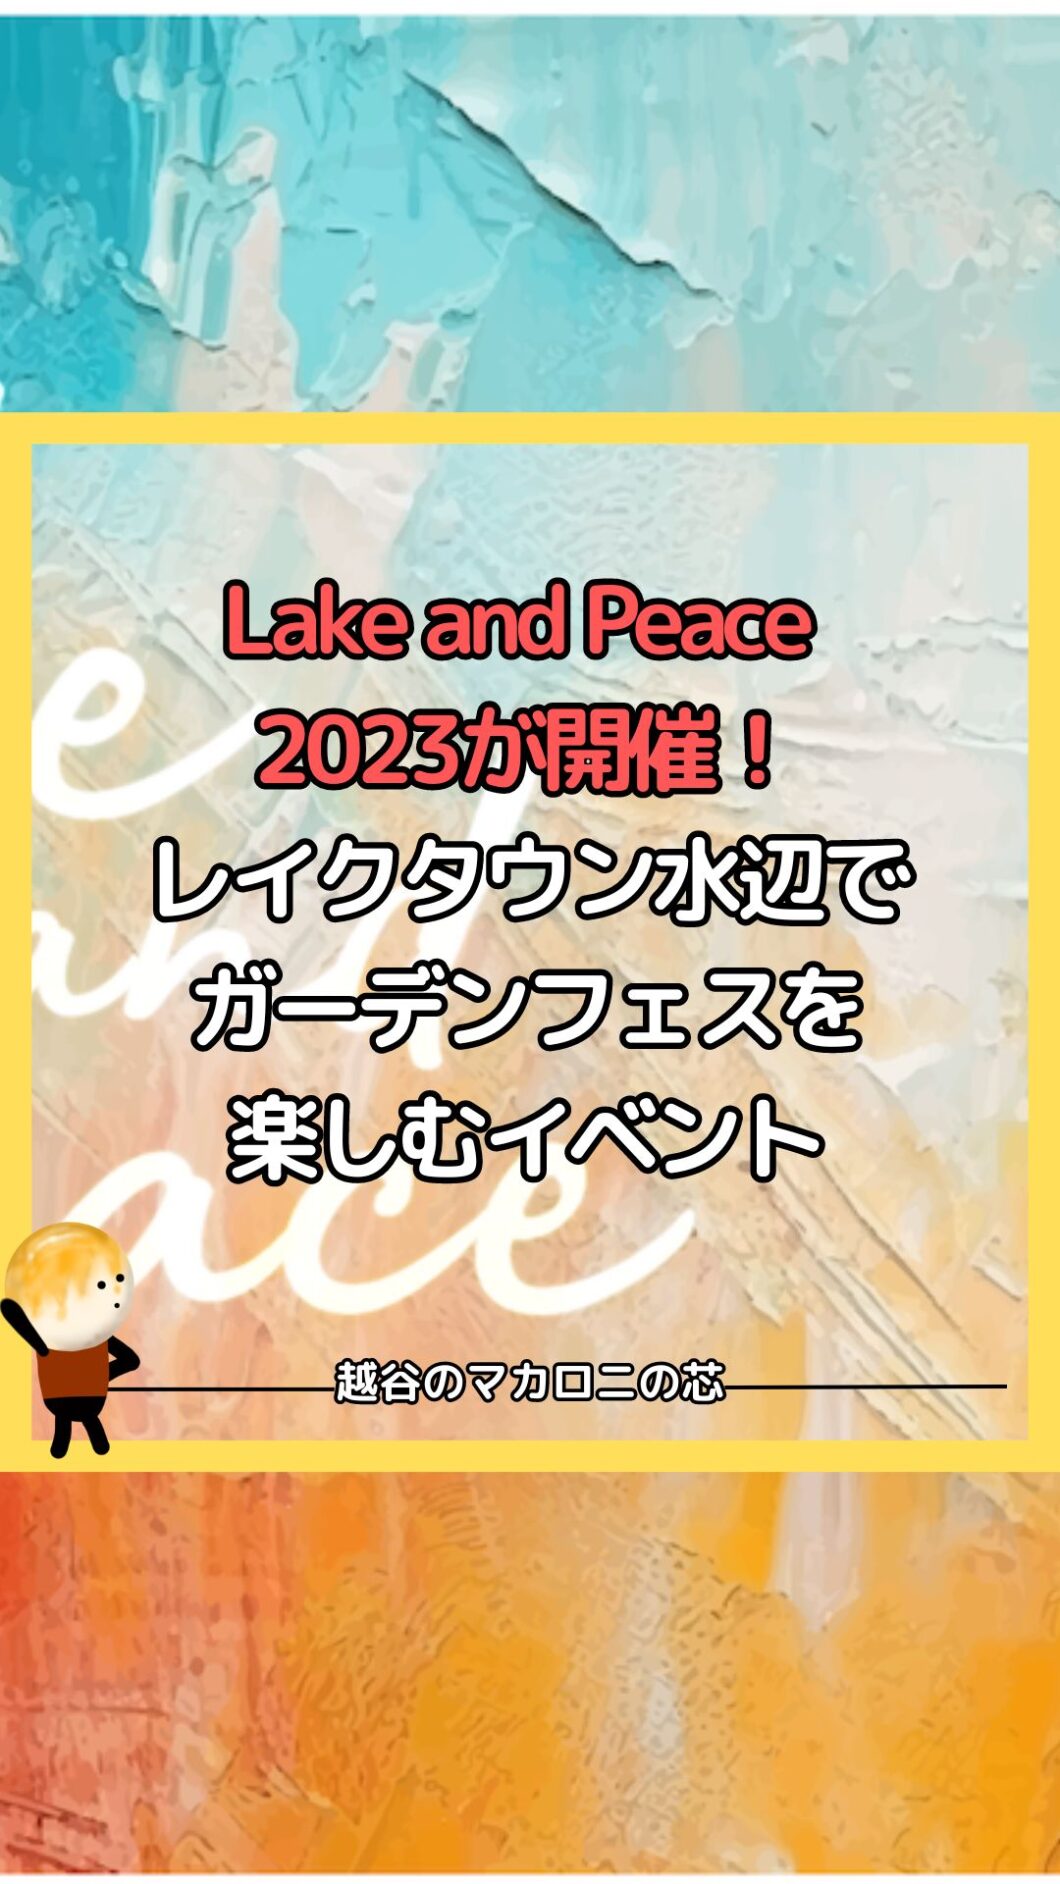 【Lake and Peace 2023】が開催！レイクタウン水辺でガーデンフェスを楽しむイベント